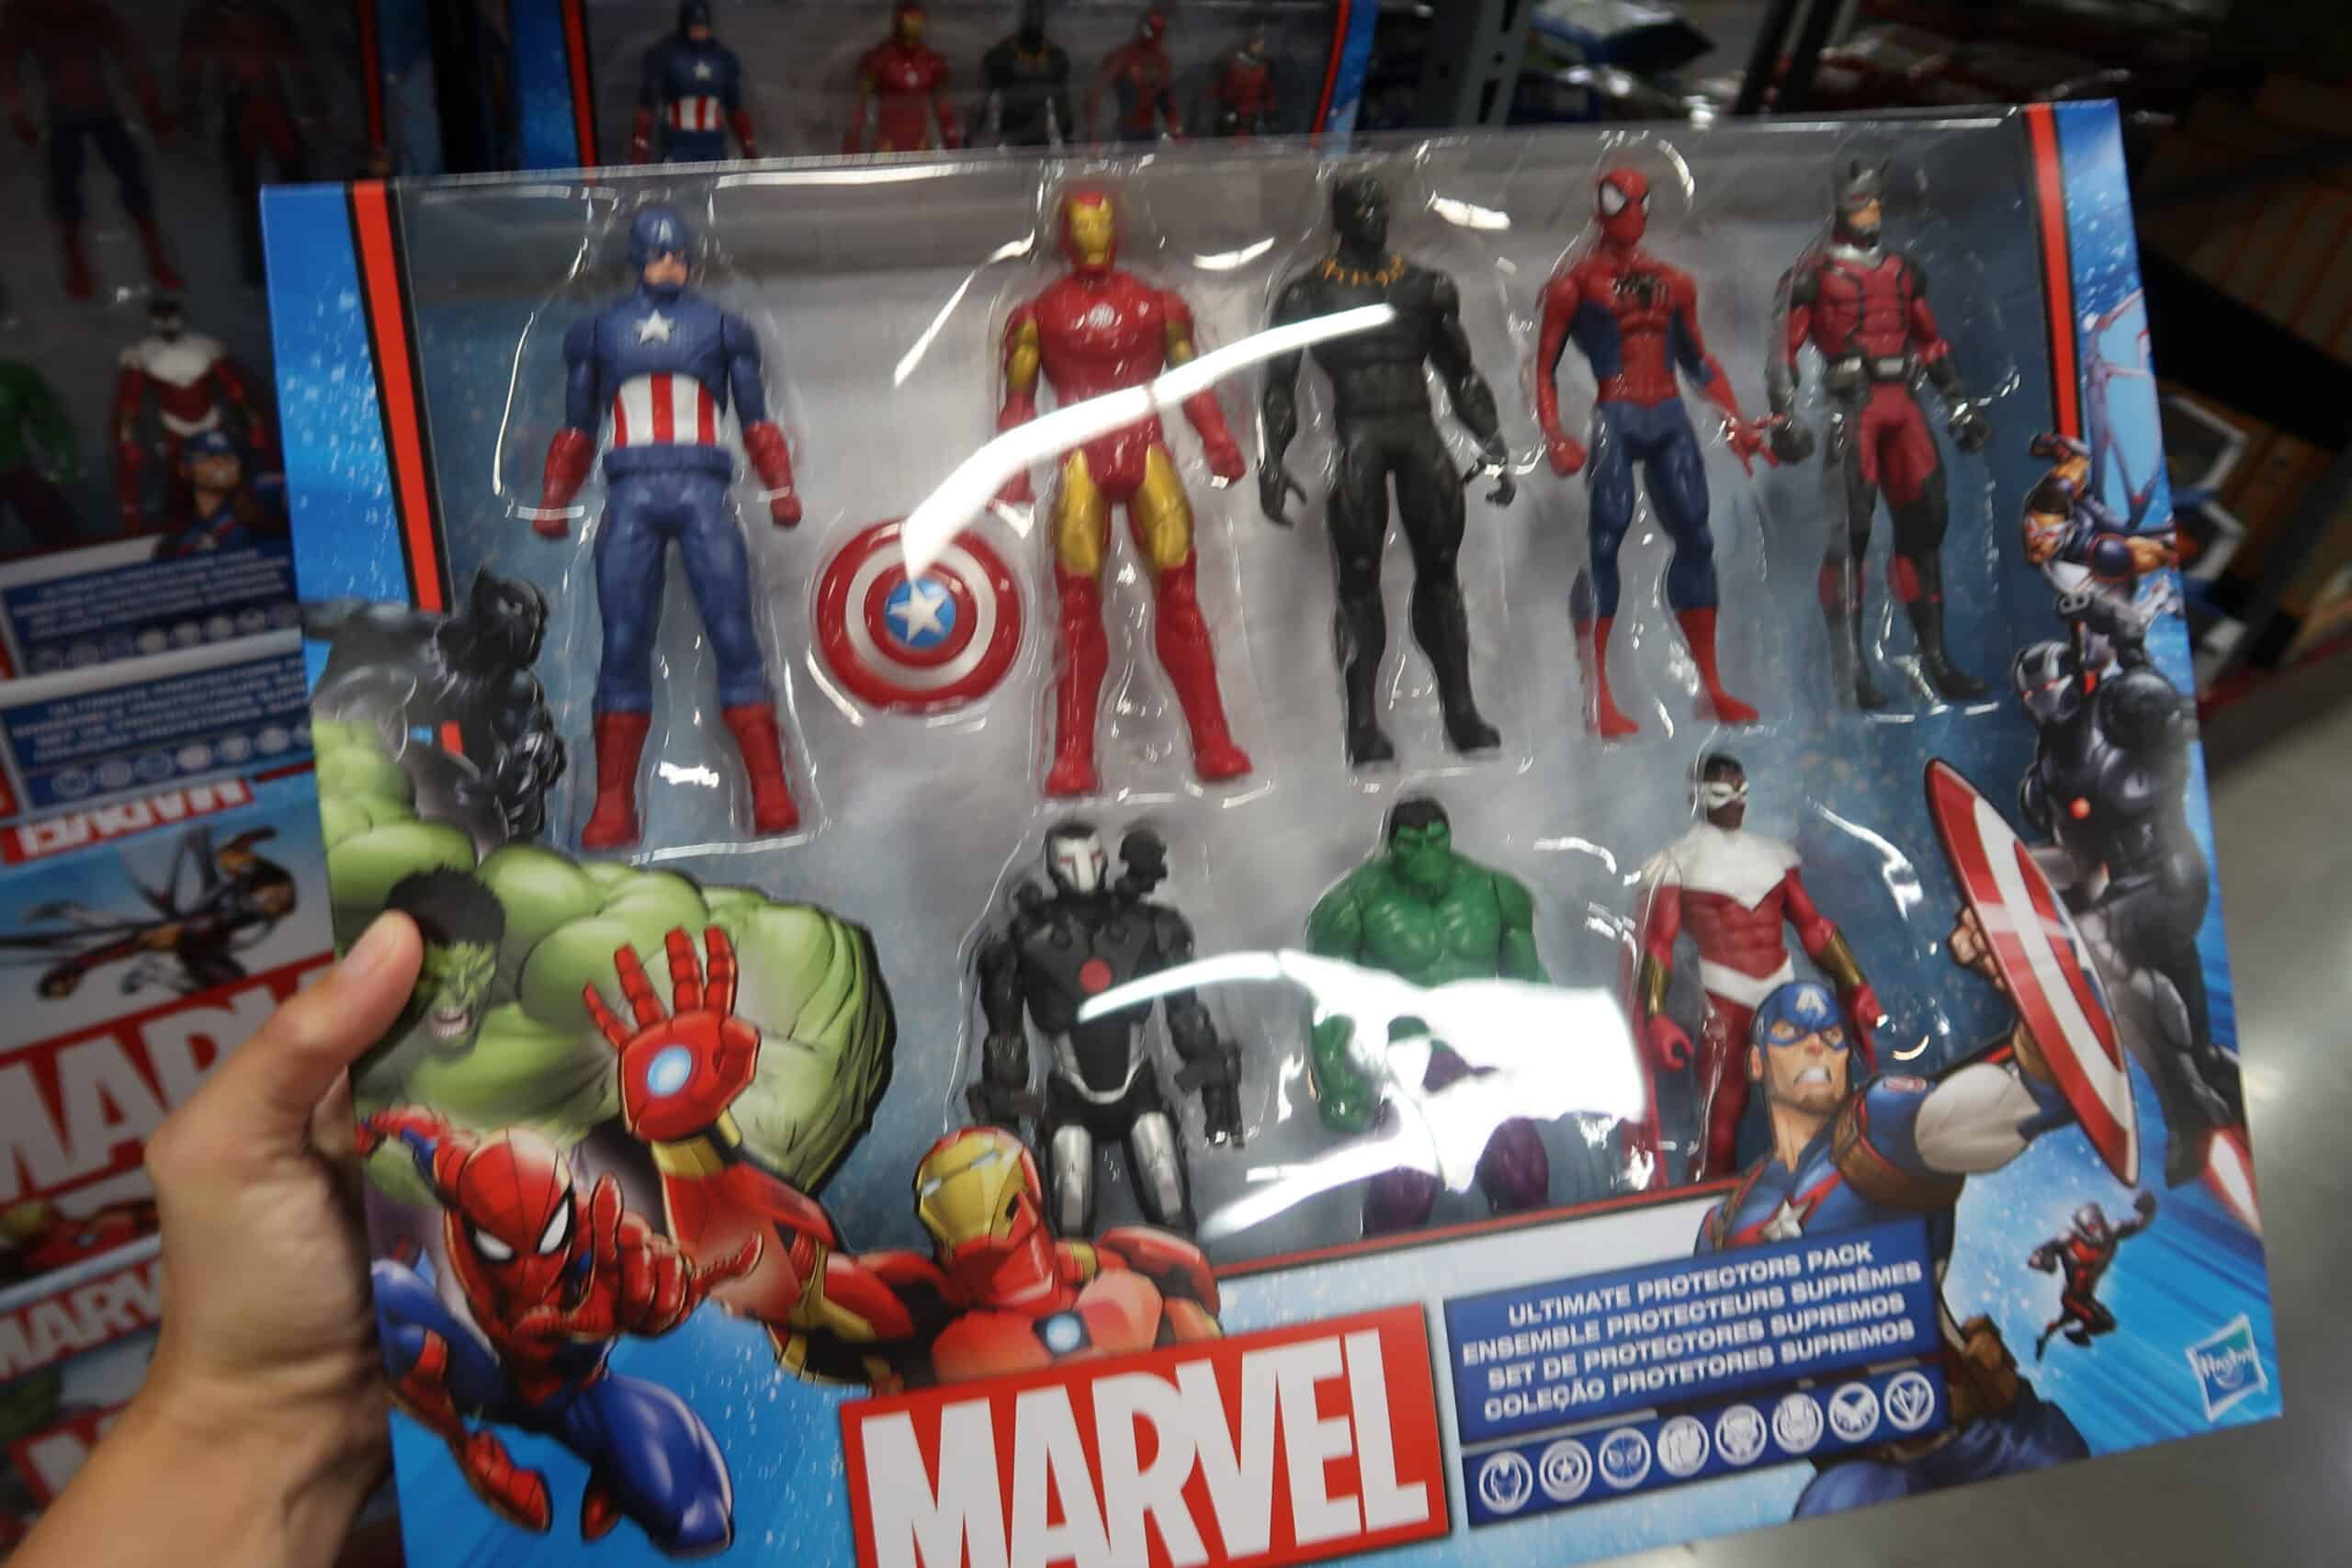 Marvel Action Figures 8 pk Set at BJ’s